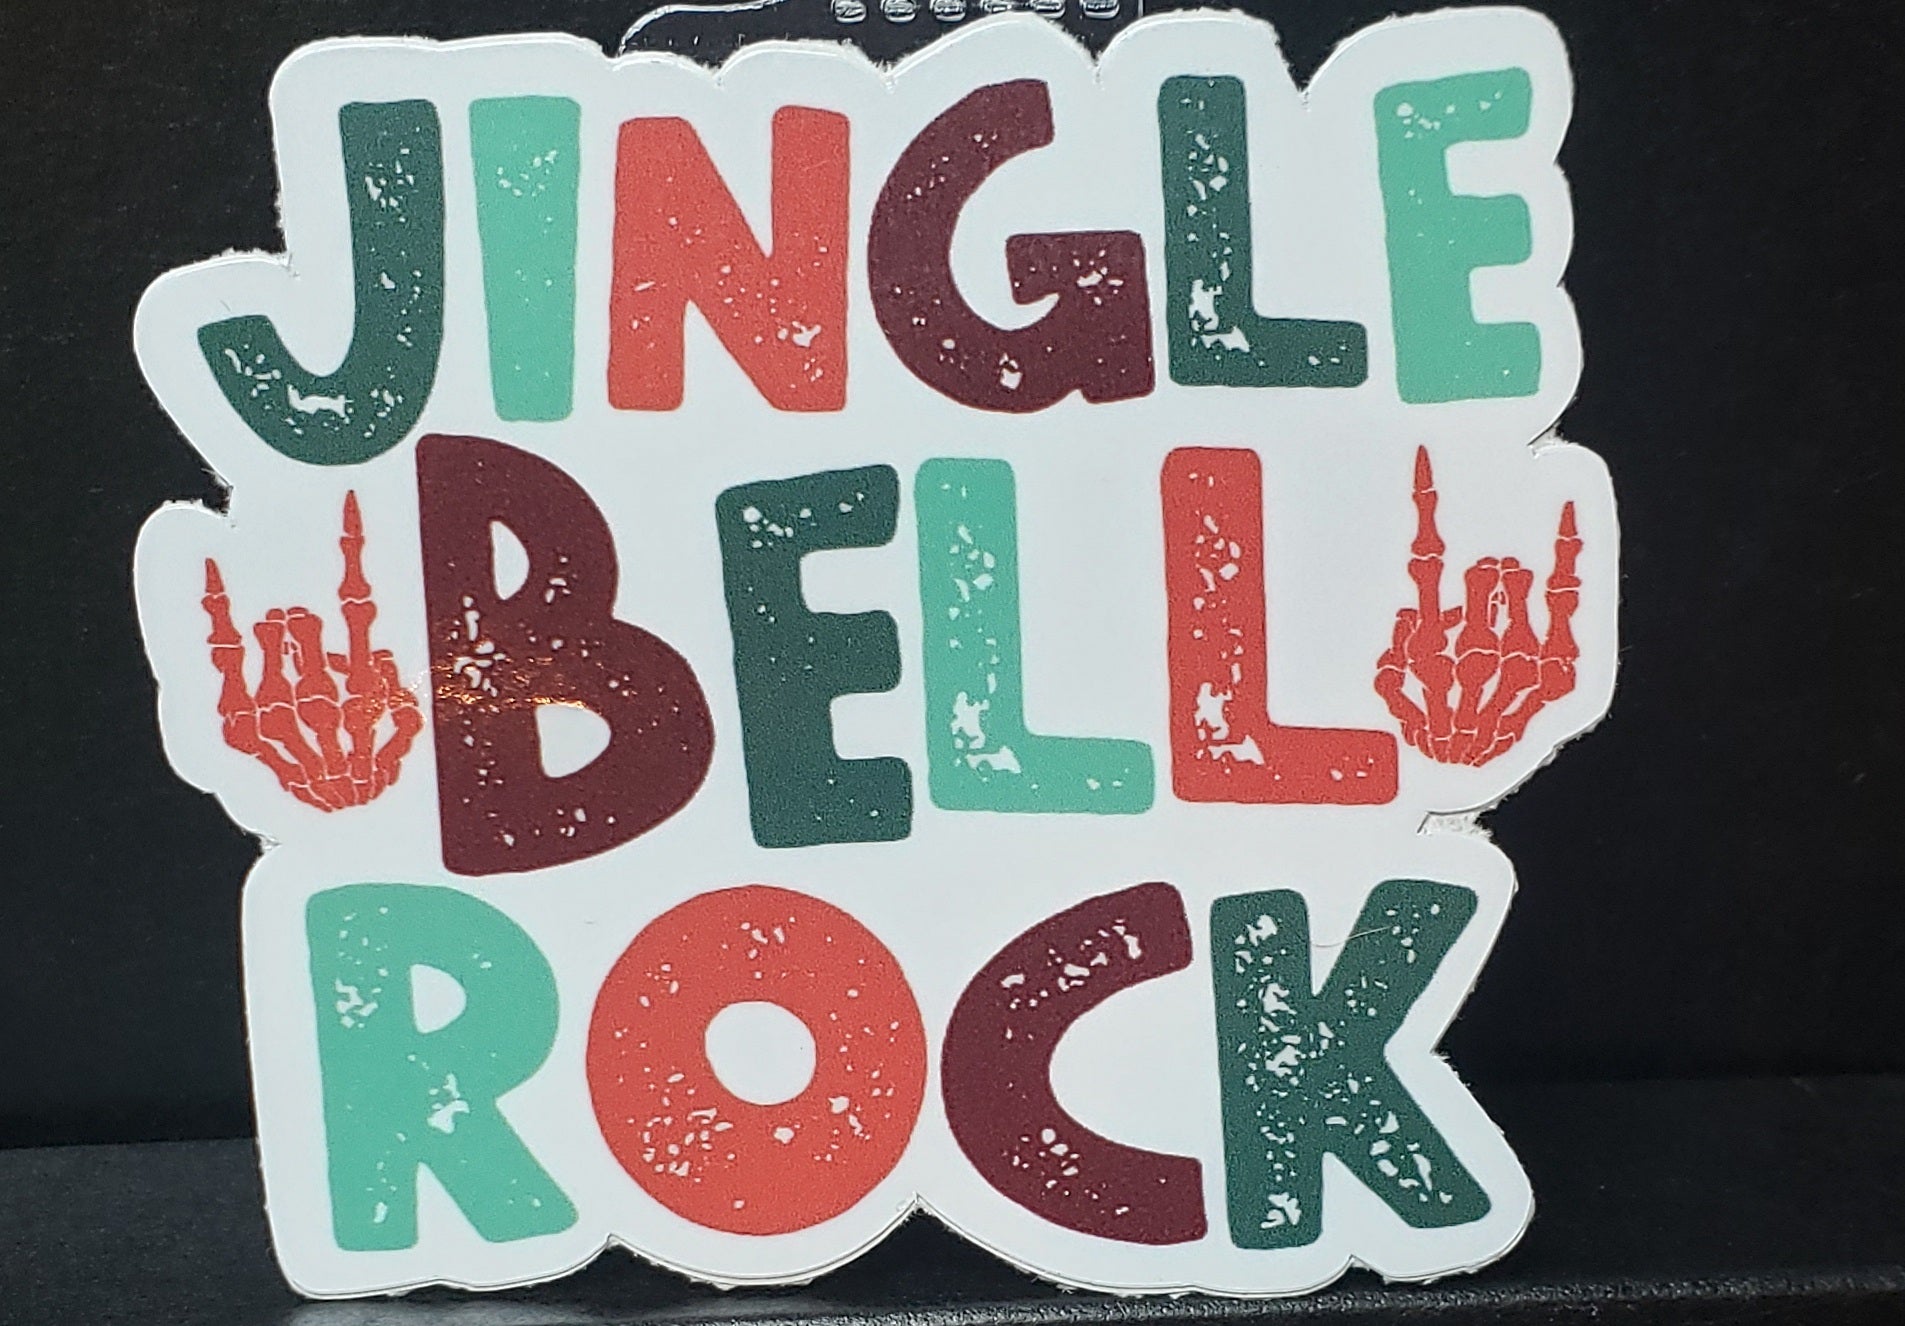 Jingle Bell Rock - Vinyl Sticker Decal